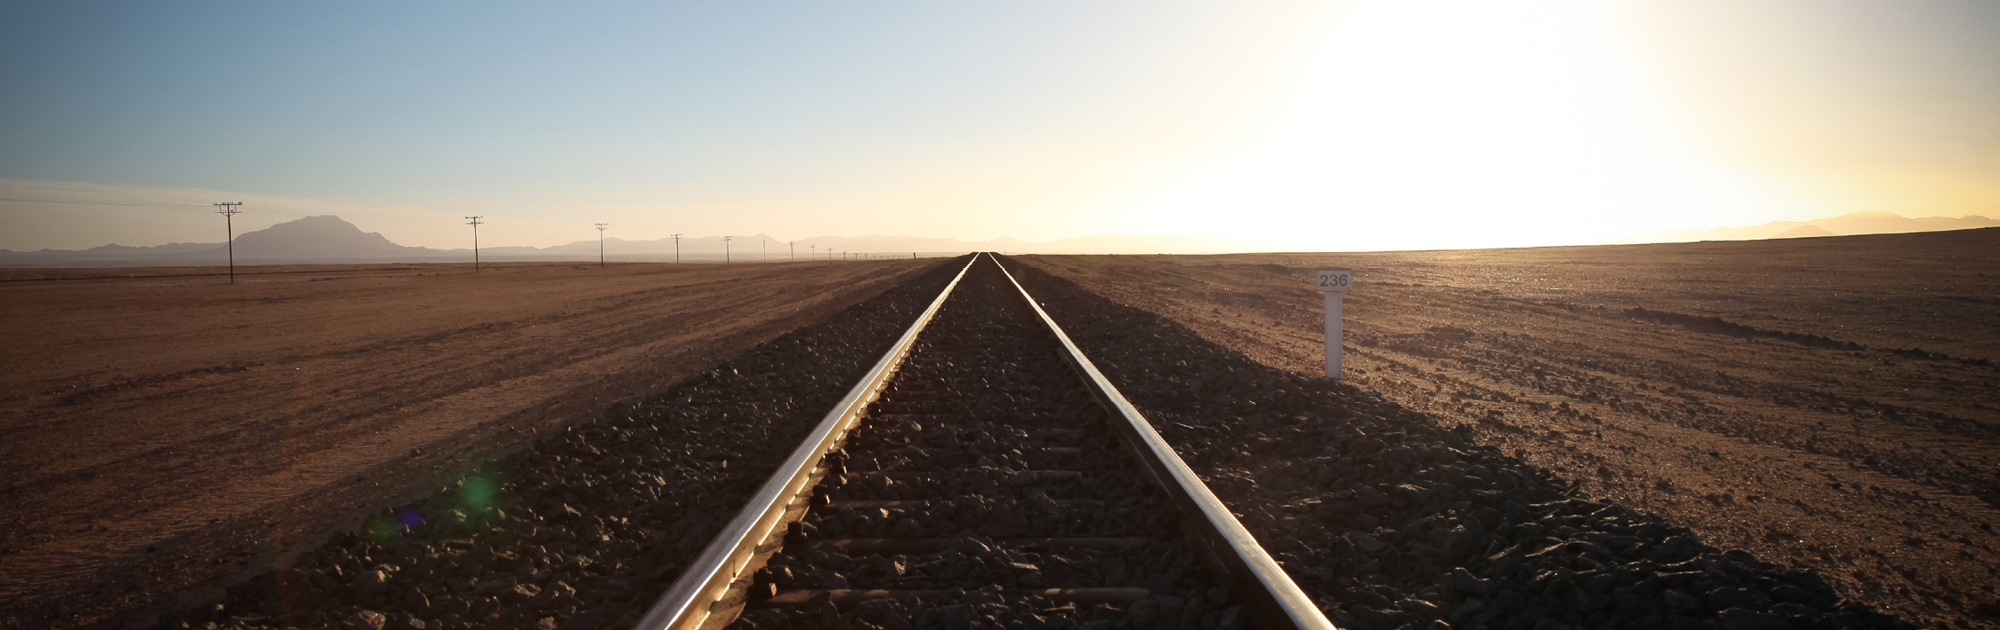 train tracks extending to horizon